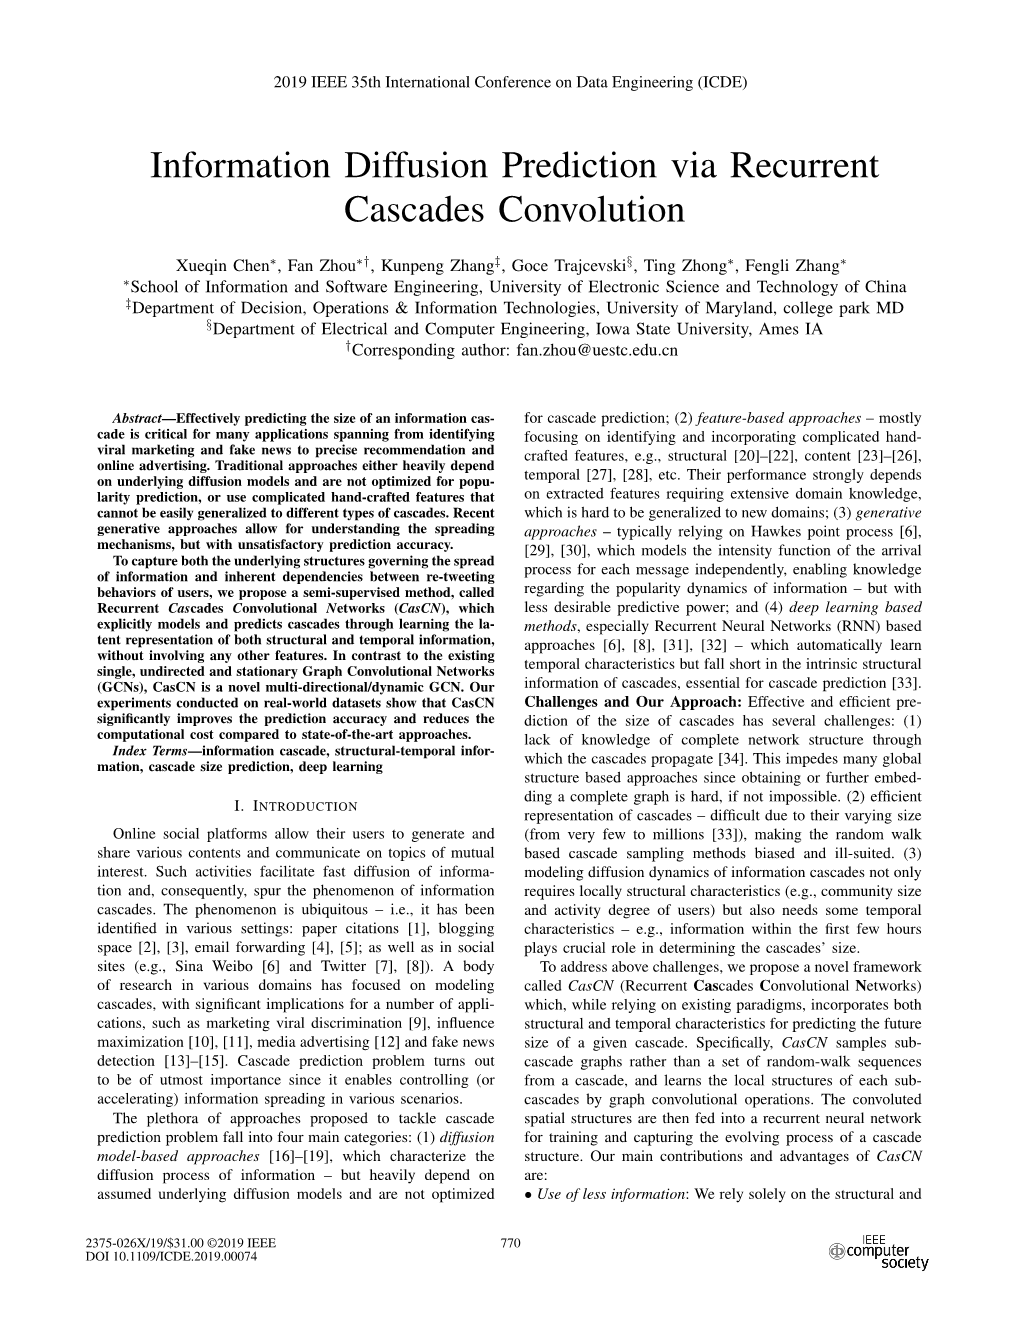 Information Diffusion Prediction Via Recurrent Cascades Convolution